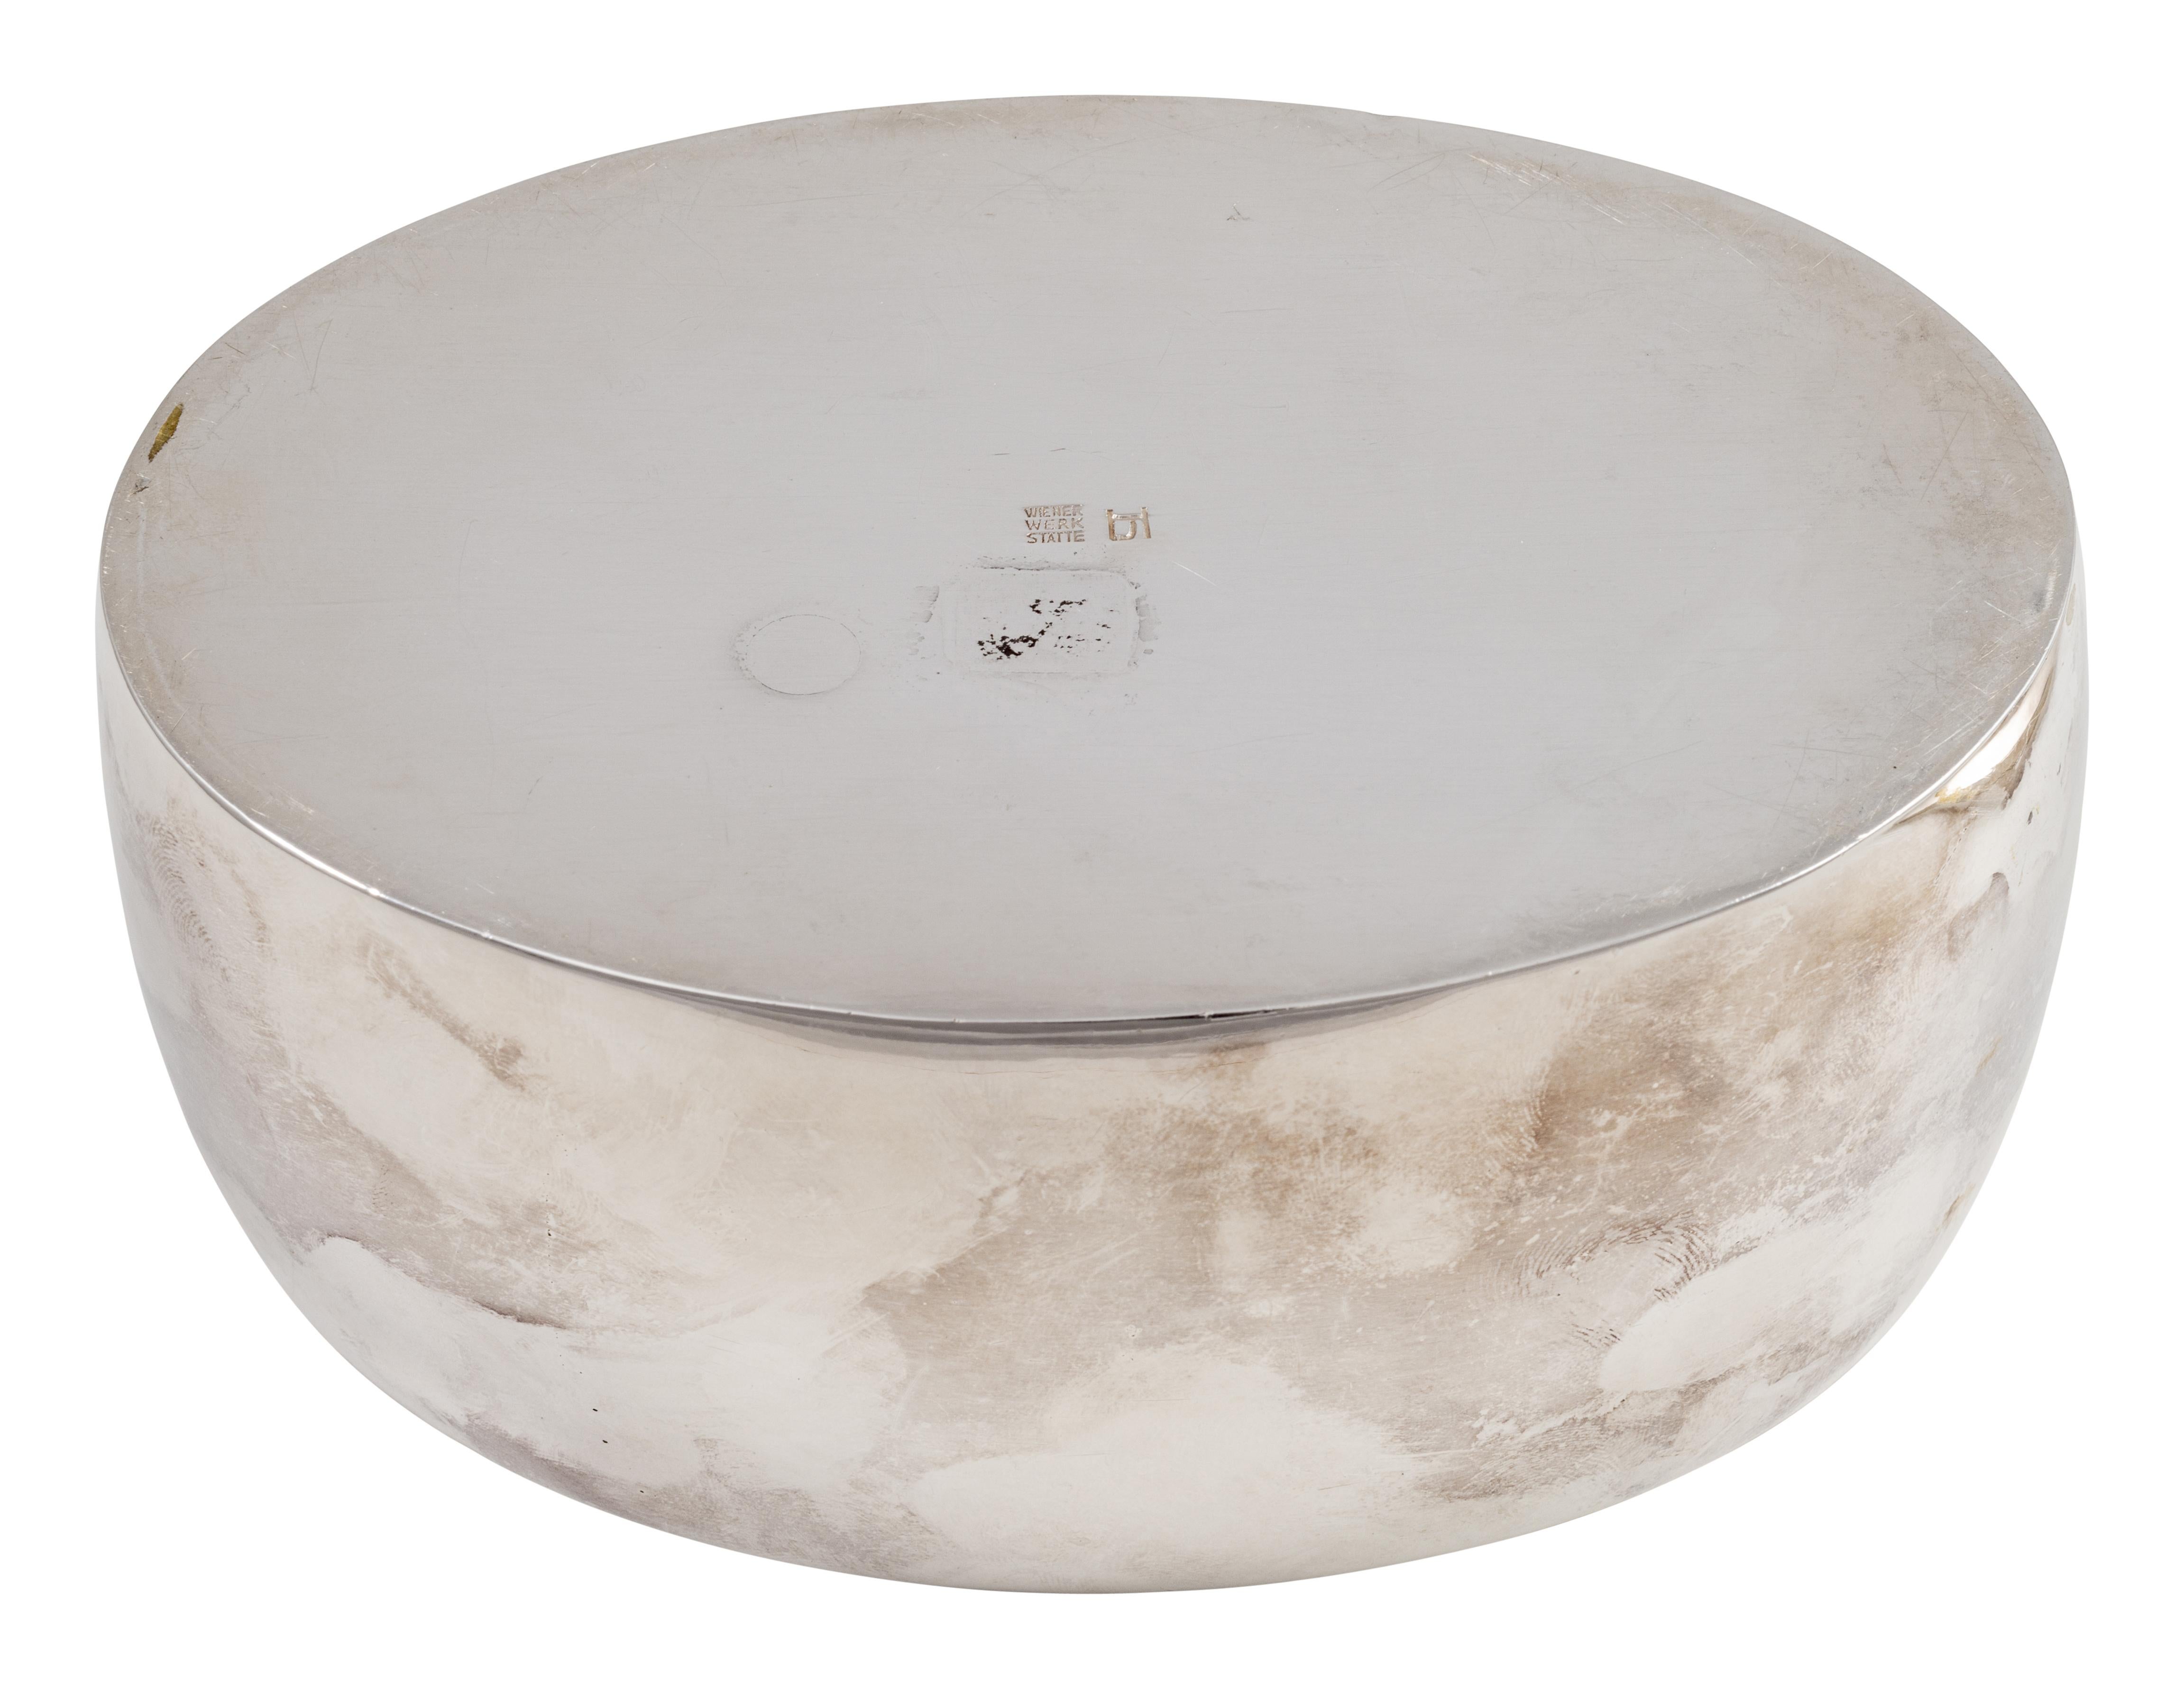 Sugar bowl designed by Josef Hoffmann manufactured by Wiener Werkstatte circa 1910 Austrian Jugendstil White Brass Silver-Plated

Josef Hoffmann, co-founder of the Wiener Werkstätte, was an extremely productive and versatile designer. In his